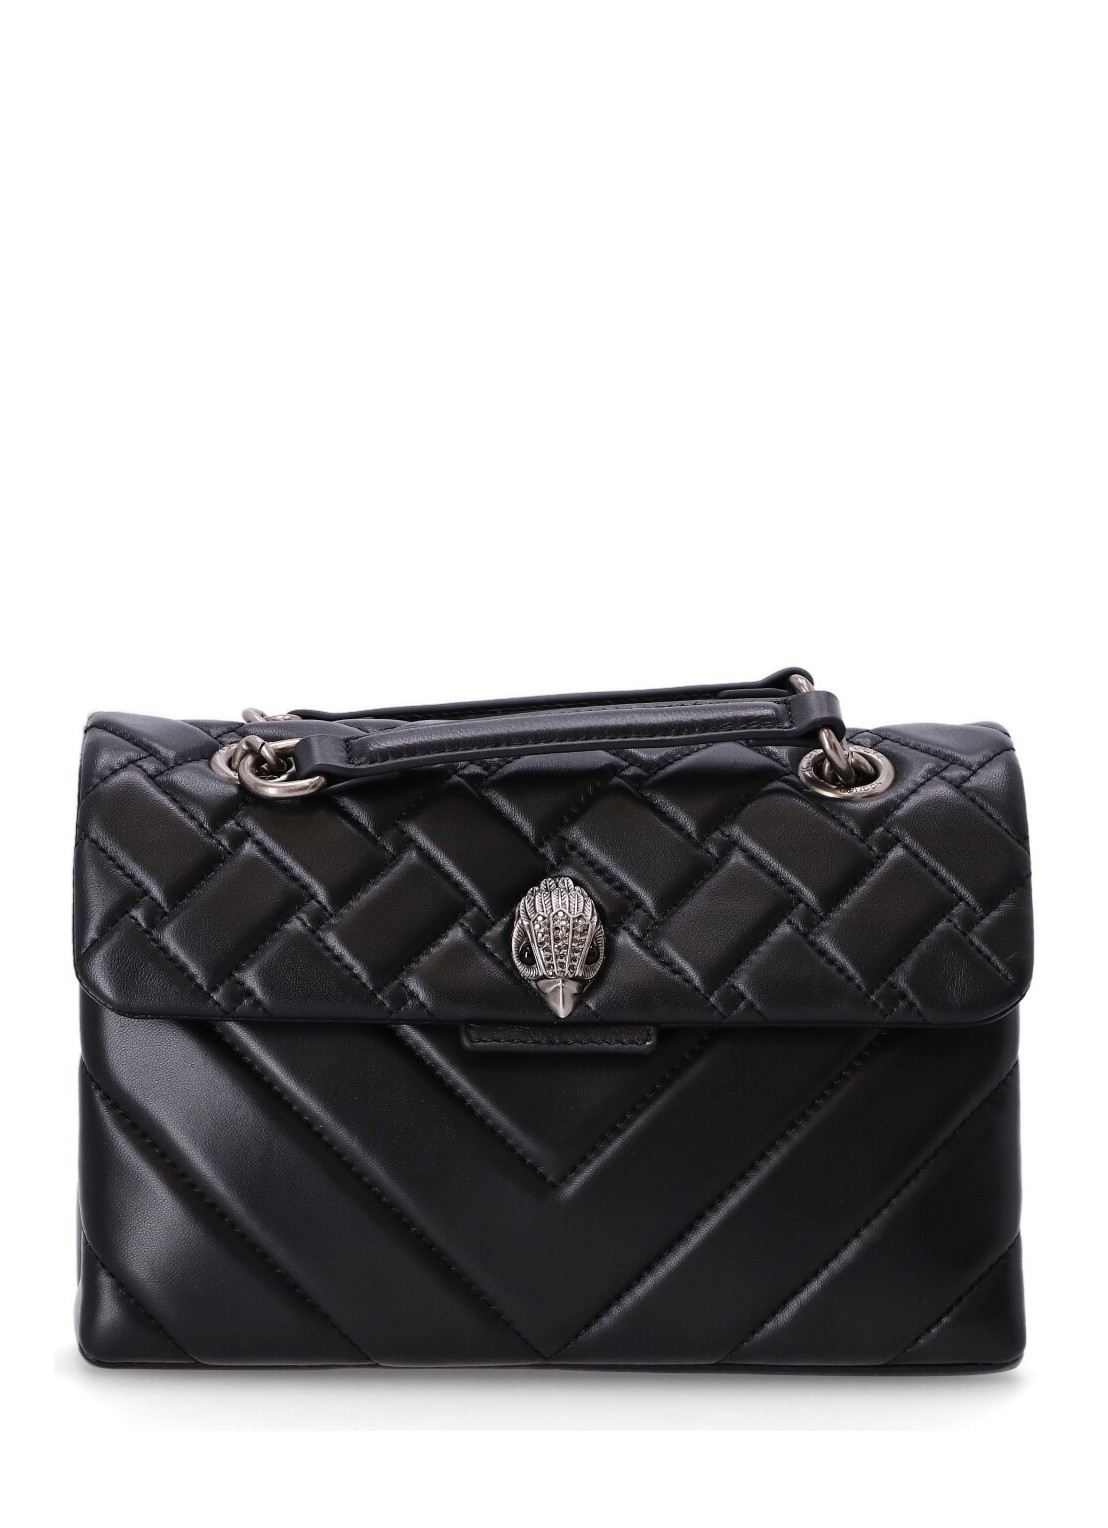 Handbag kurt geiger handbag woman leather kensington x bag 1470405109 05 talla T/U
 